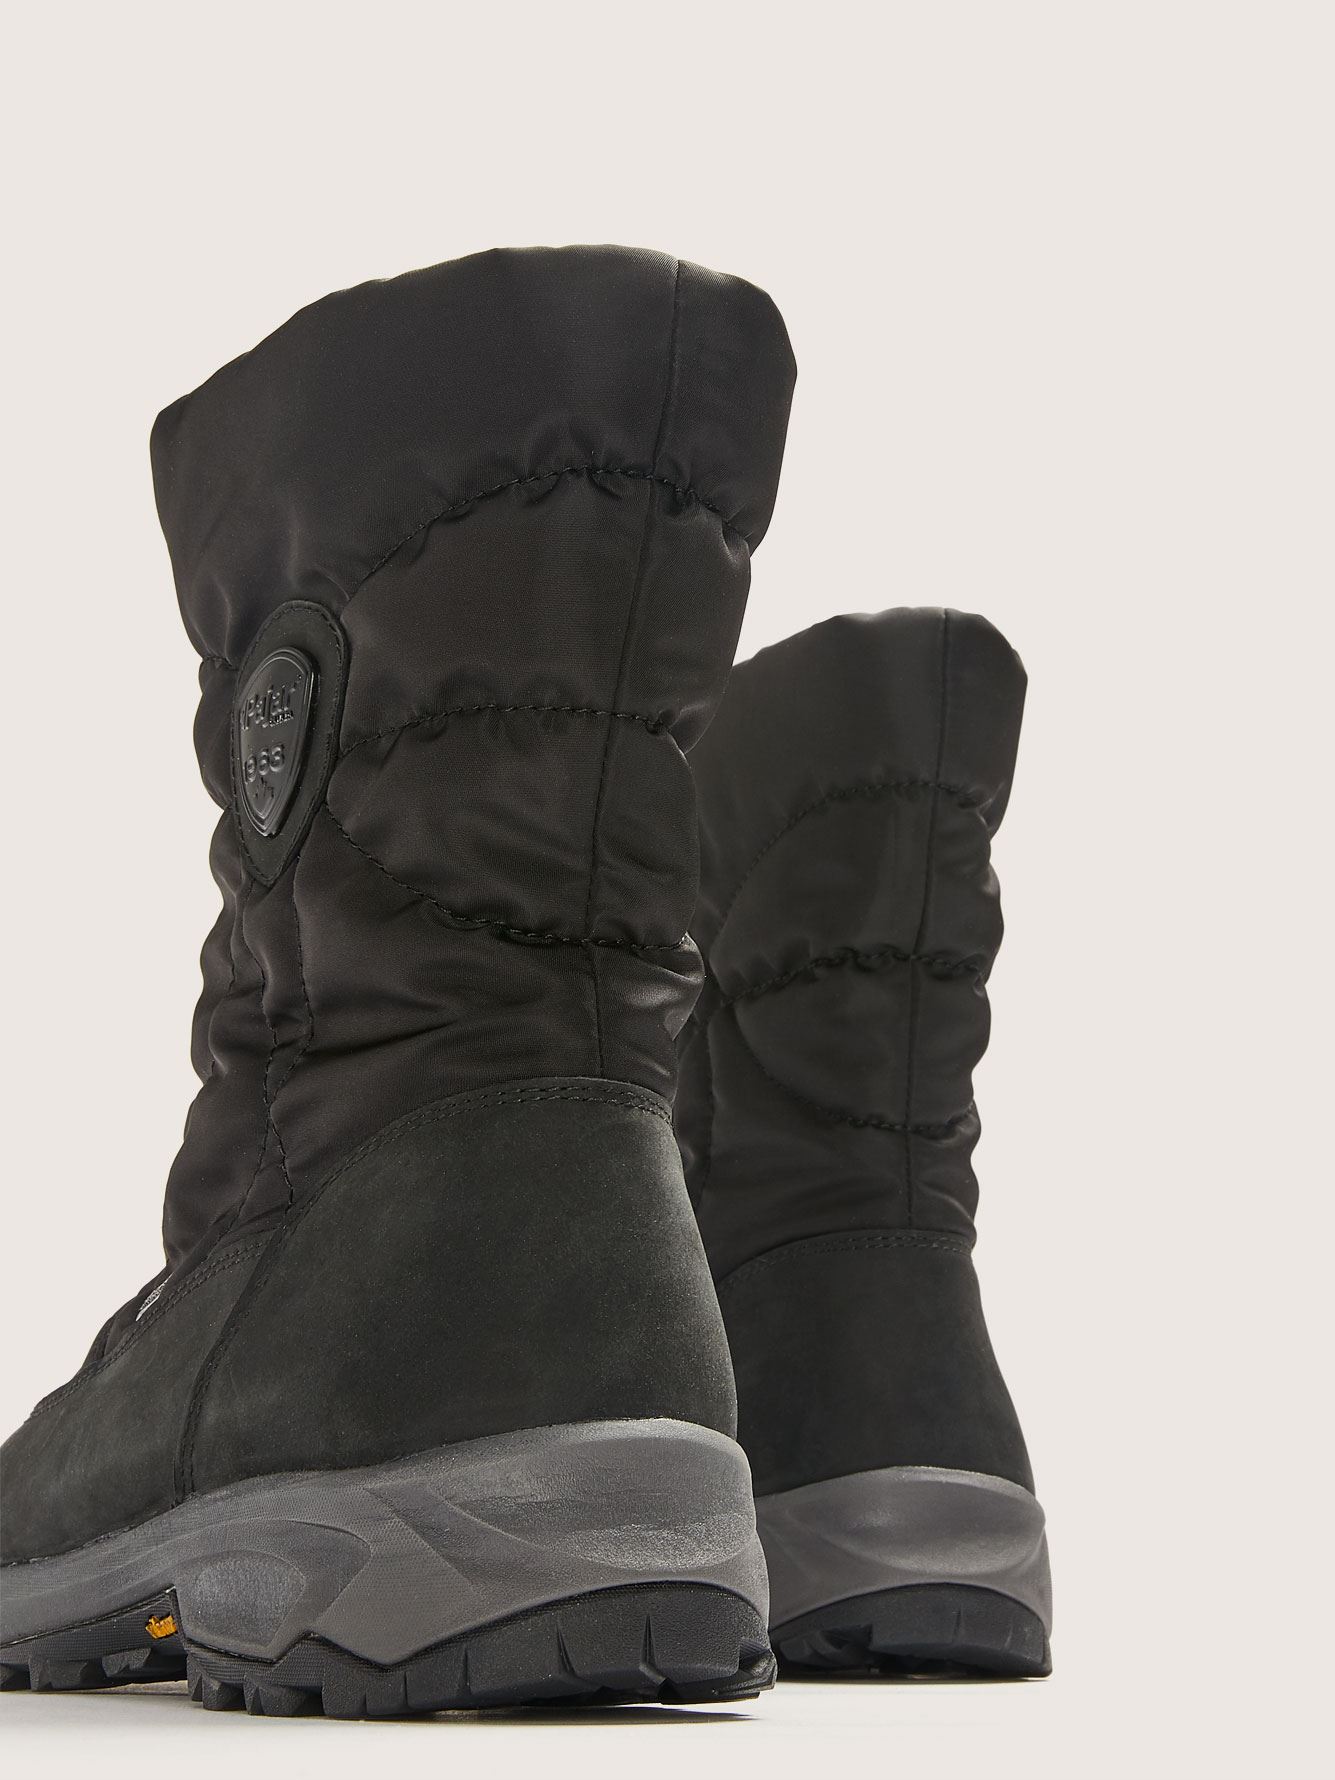 anti slip winter boots